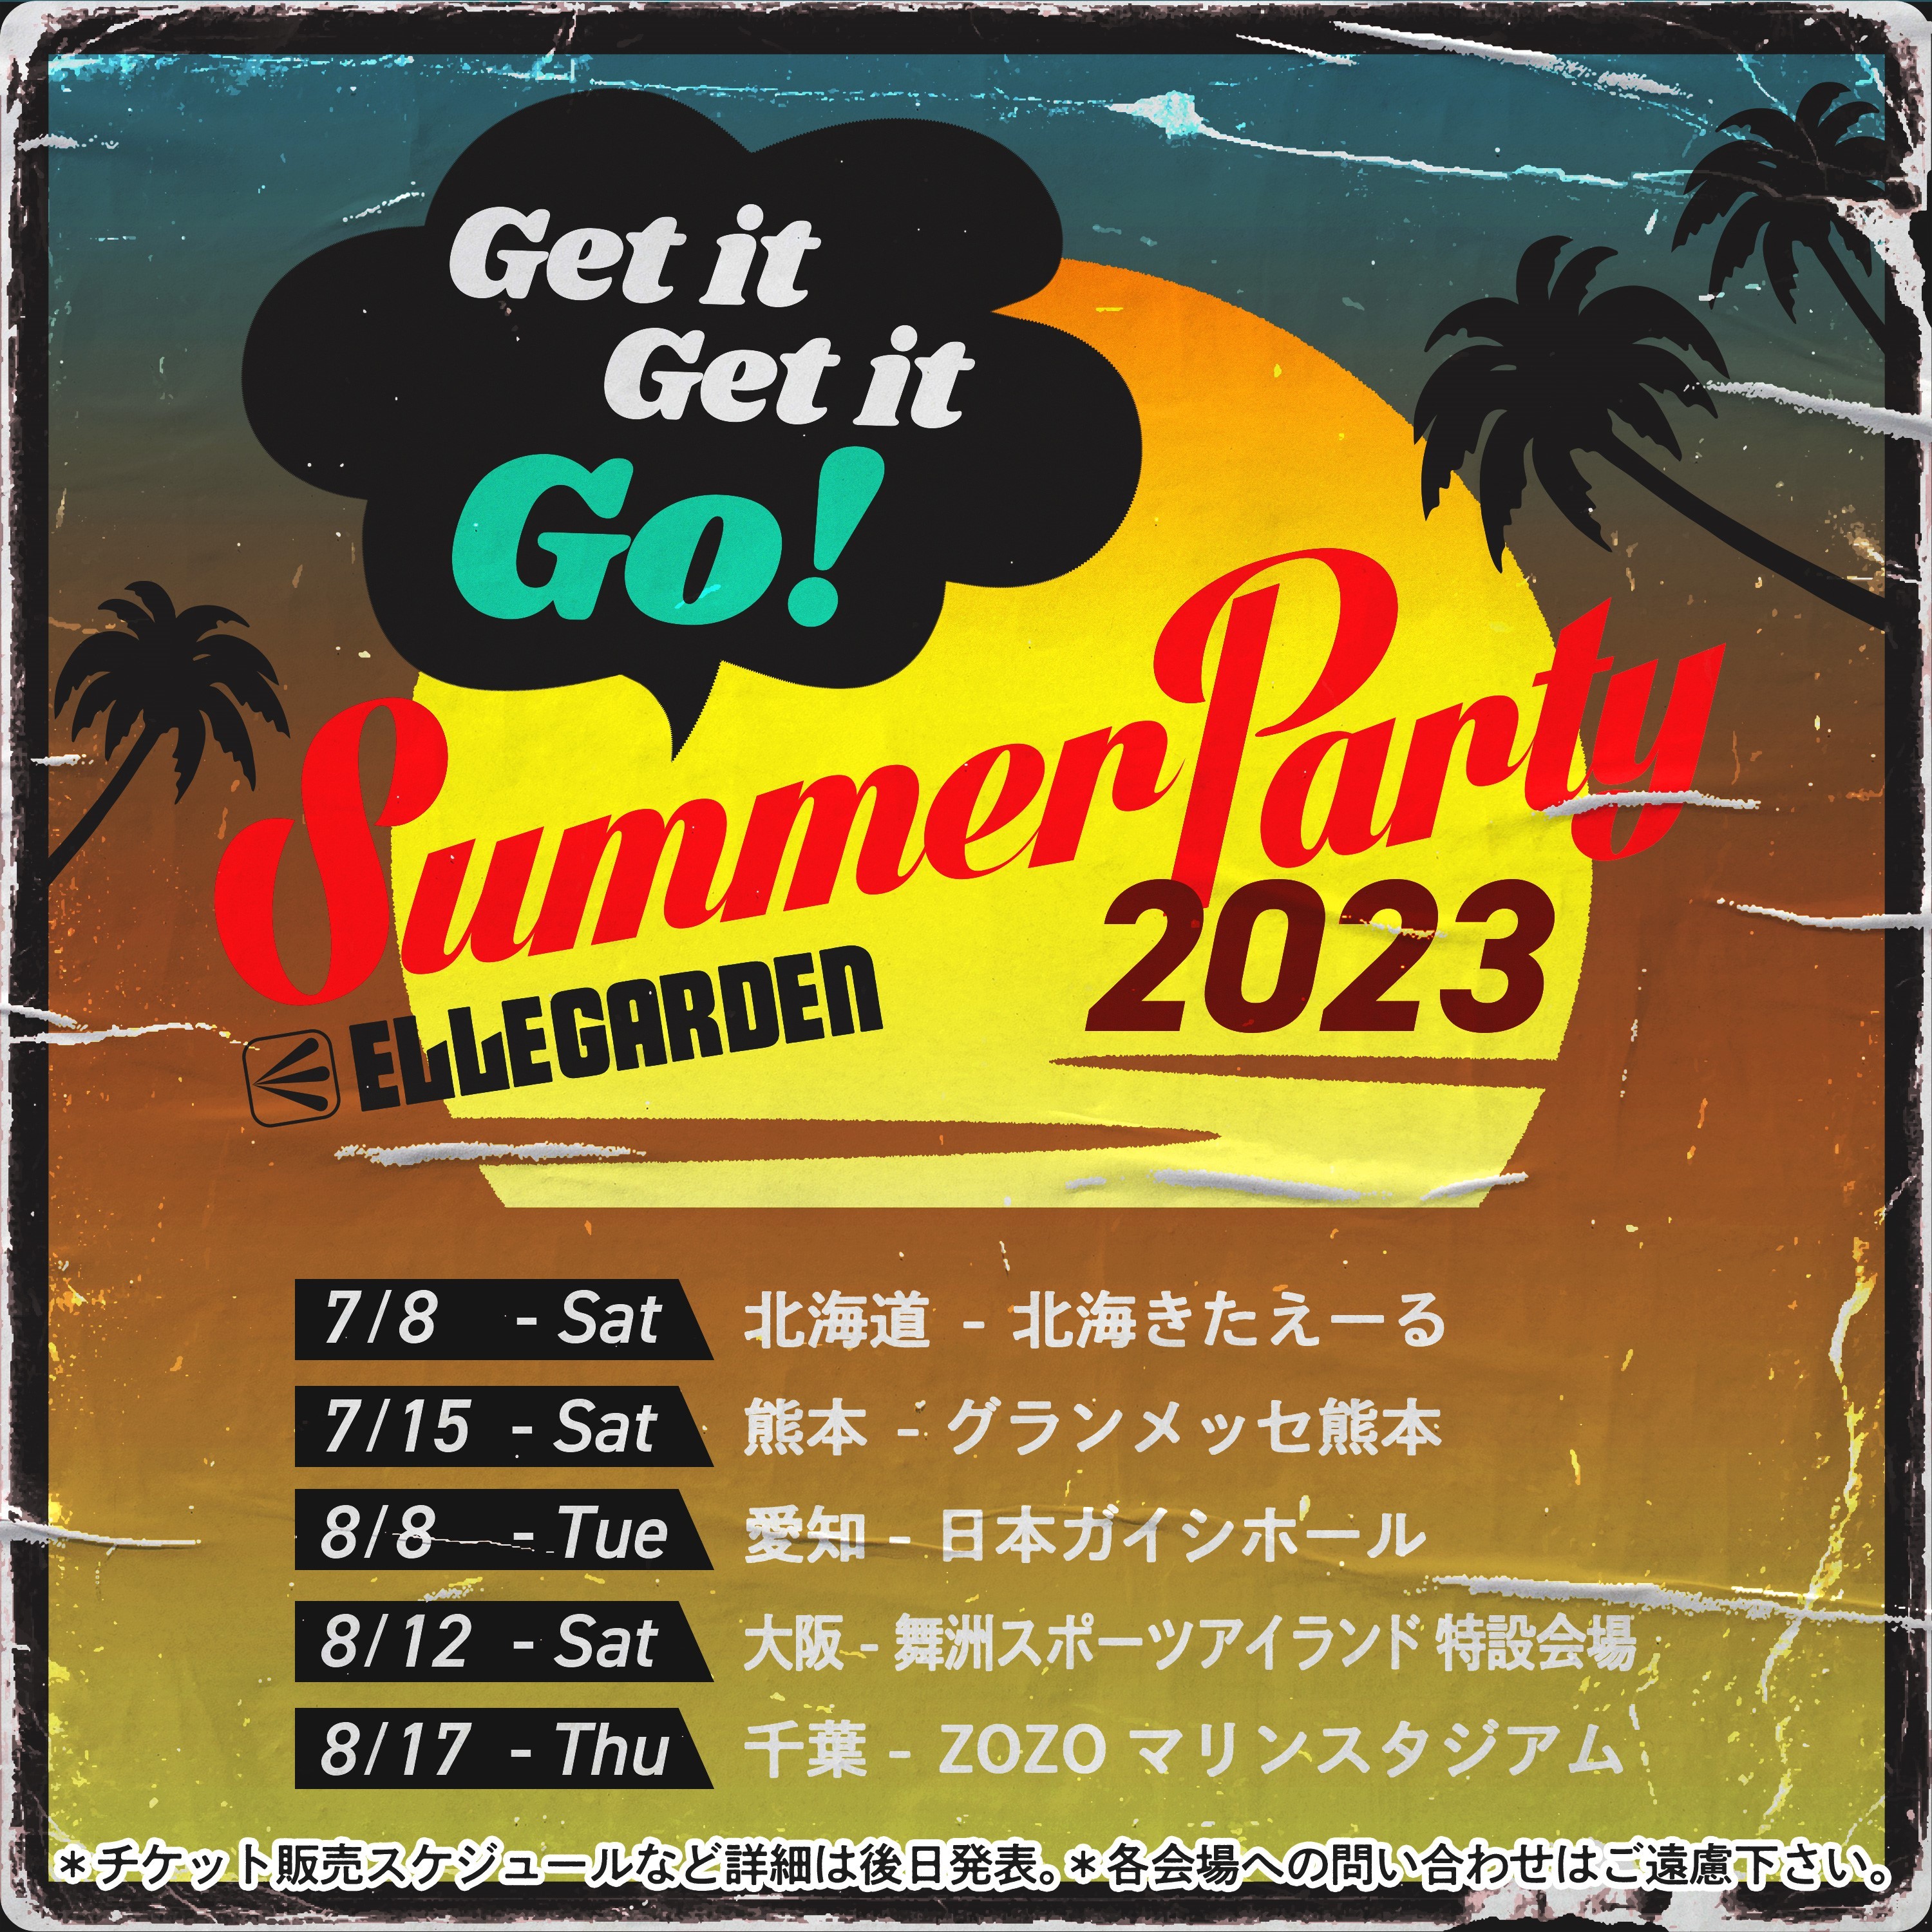 『Get it Get it Go! SUMMER PARTY 2023』